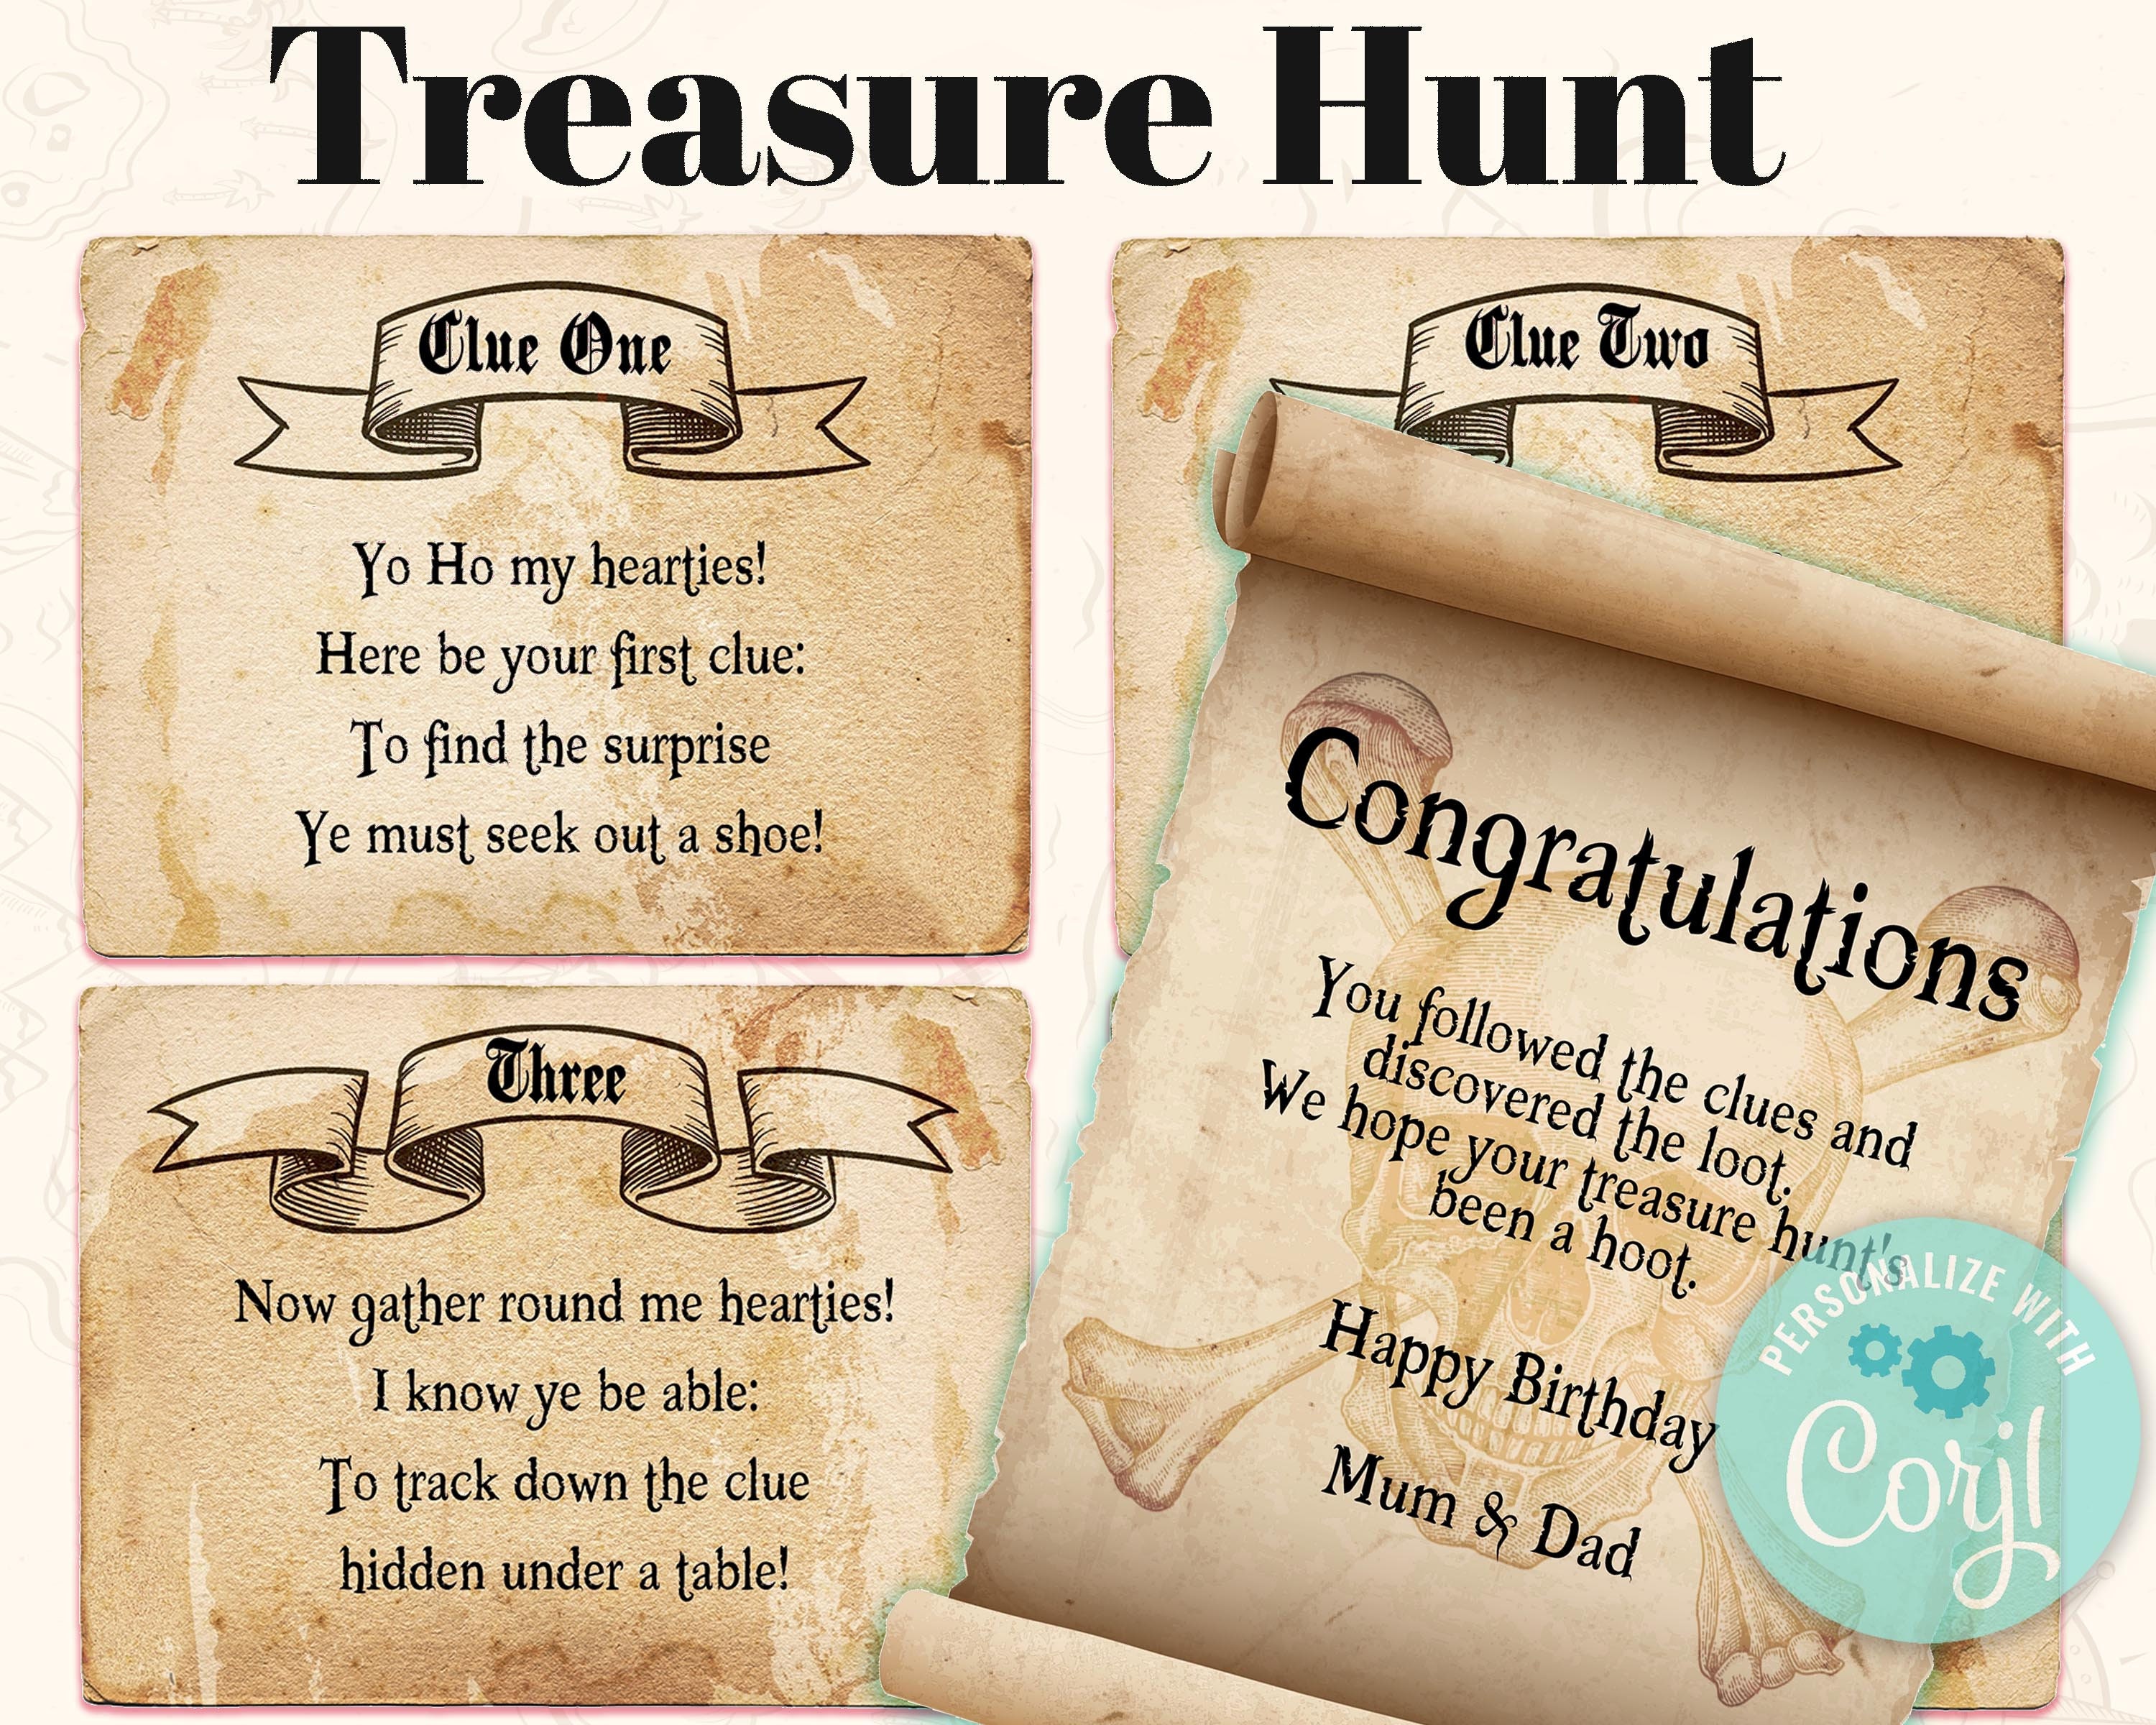 Treasure Hunter Pirates All Redeem Codes